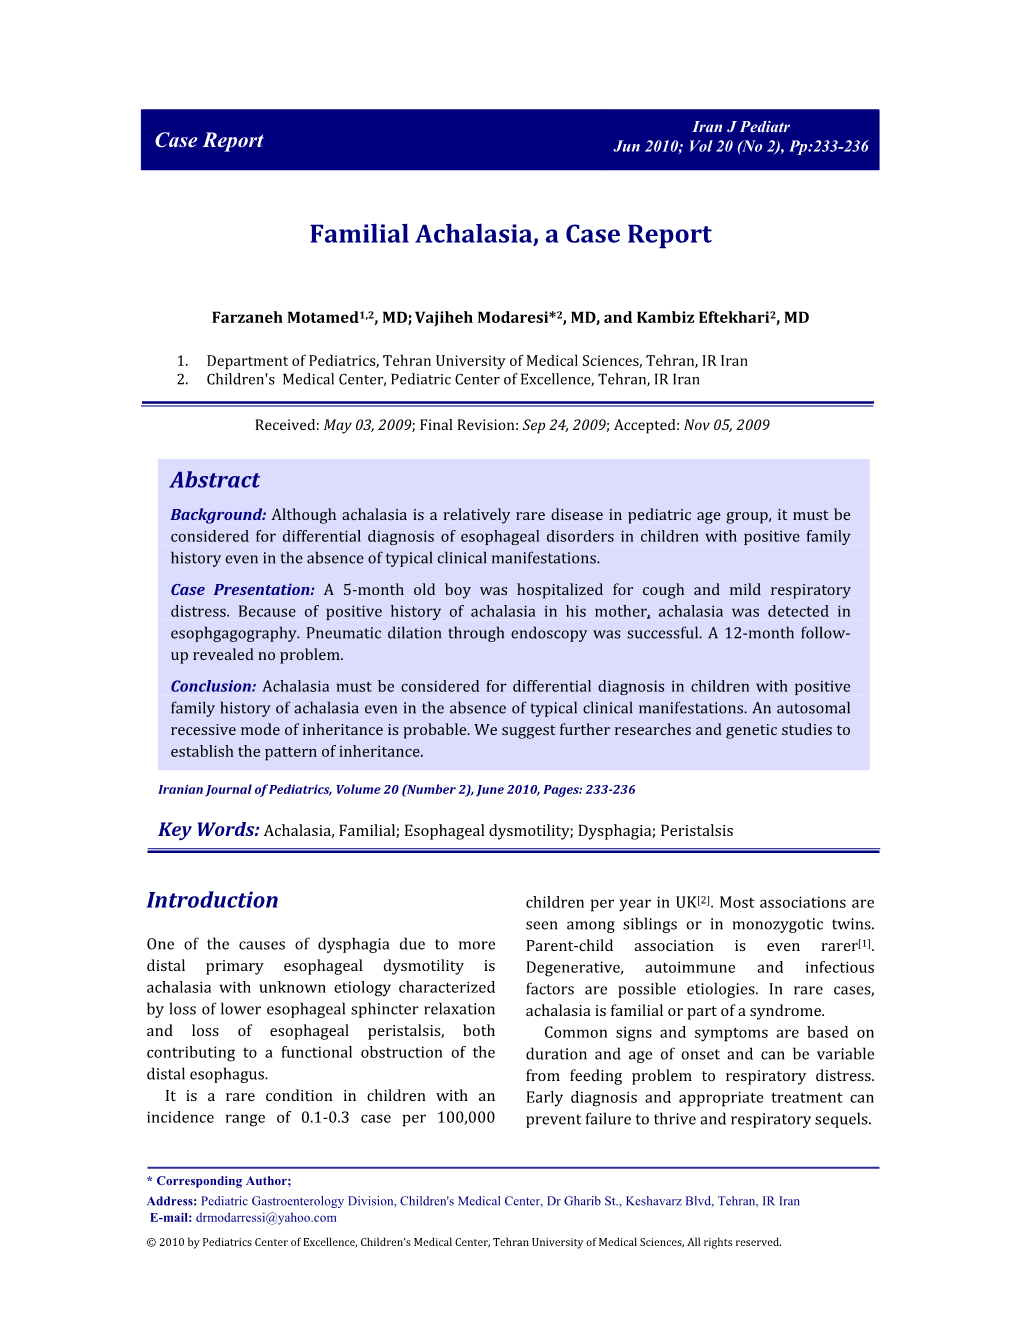 Familial Achalasia, a Case Report